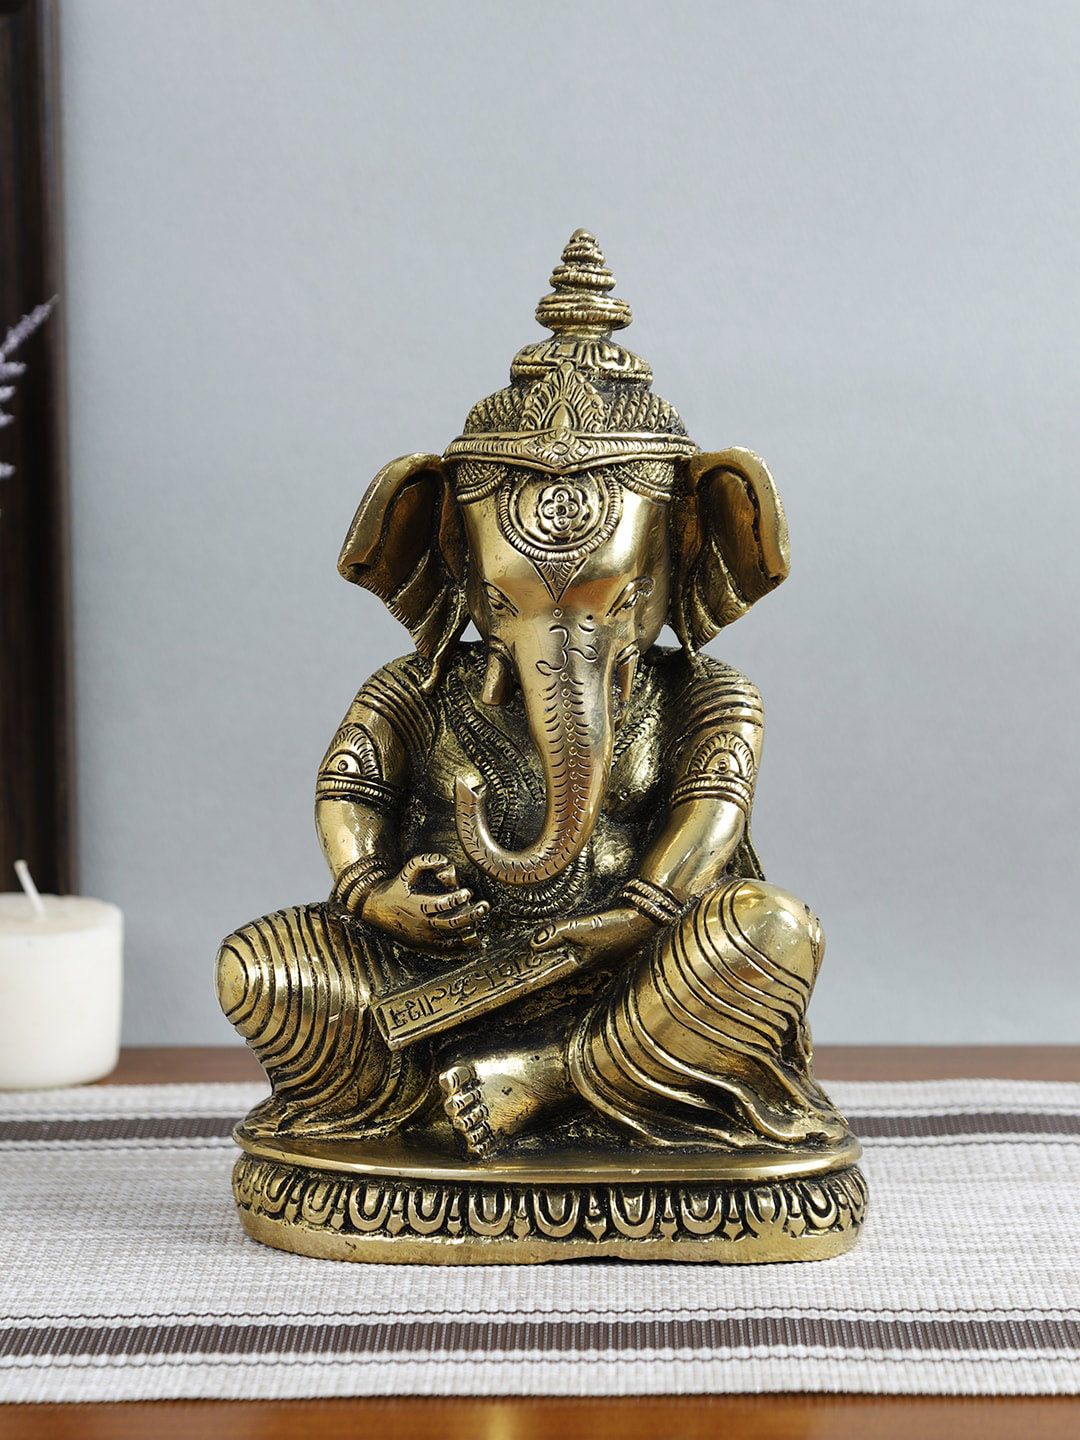 Imli Street Gold-Toned Lord Ganesh Idol Showpiece Price in India